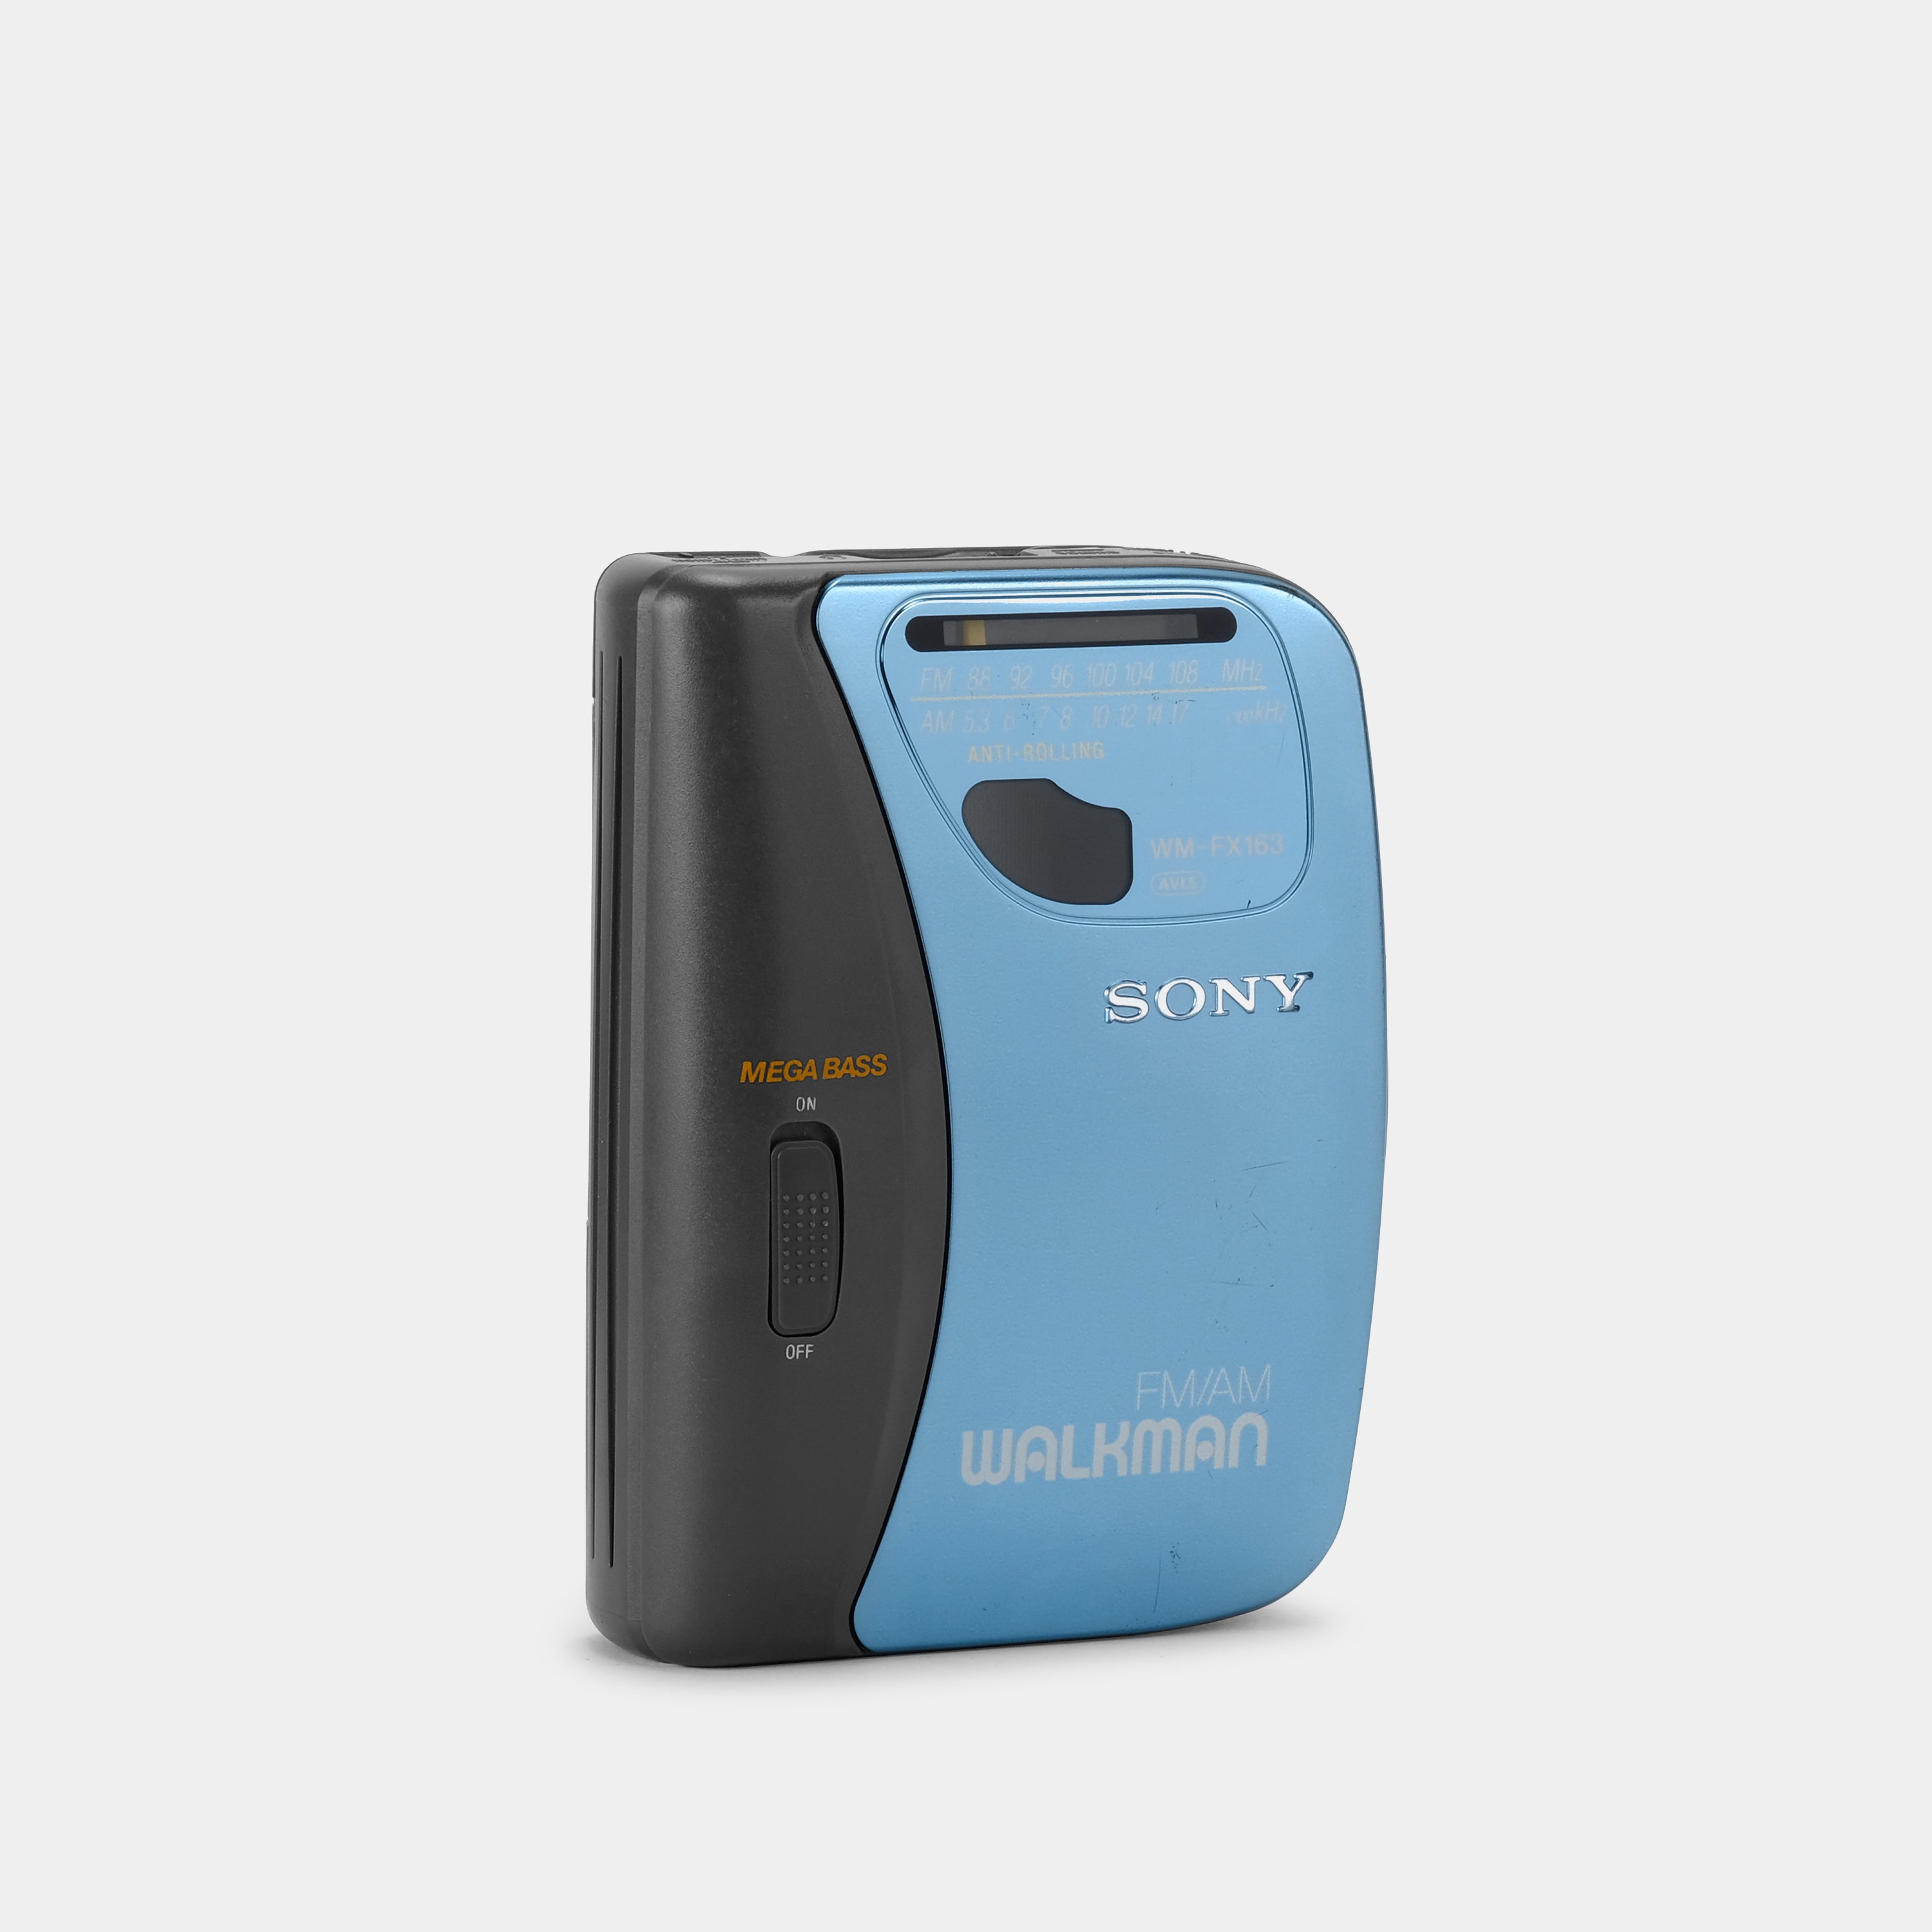 Sony Walkman WM-FX163 Blue Portable Cassette Player